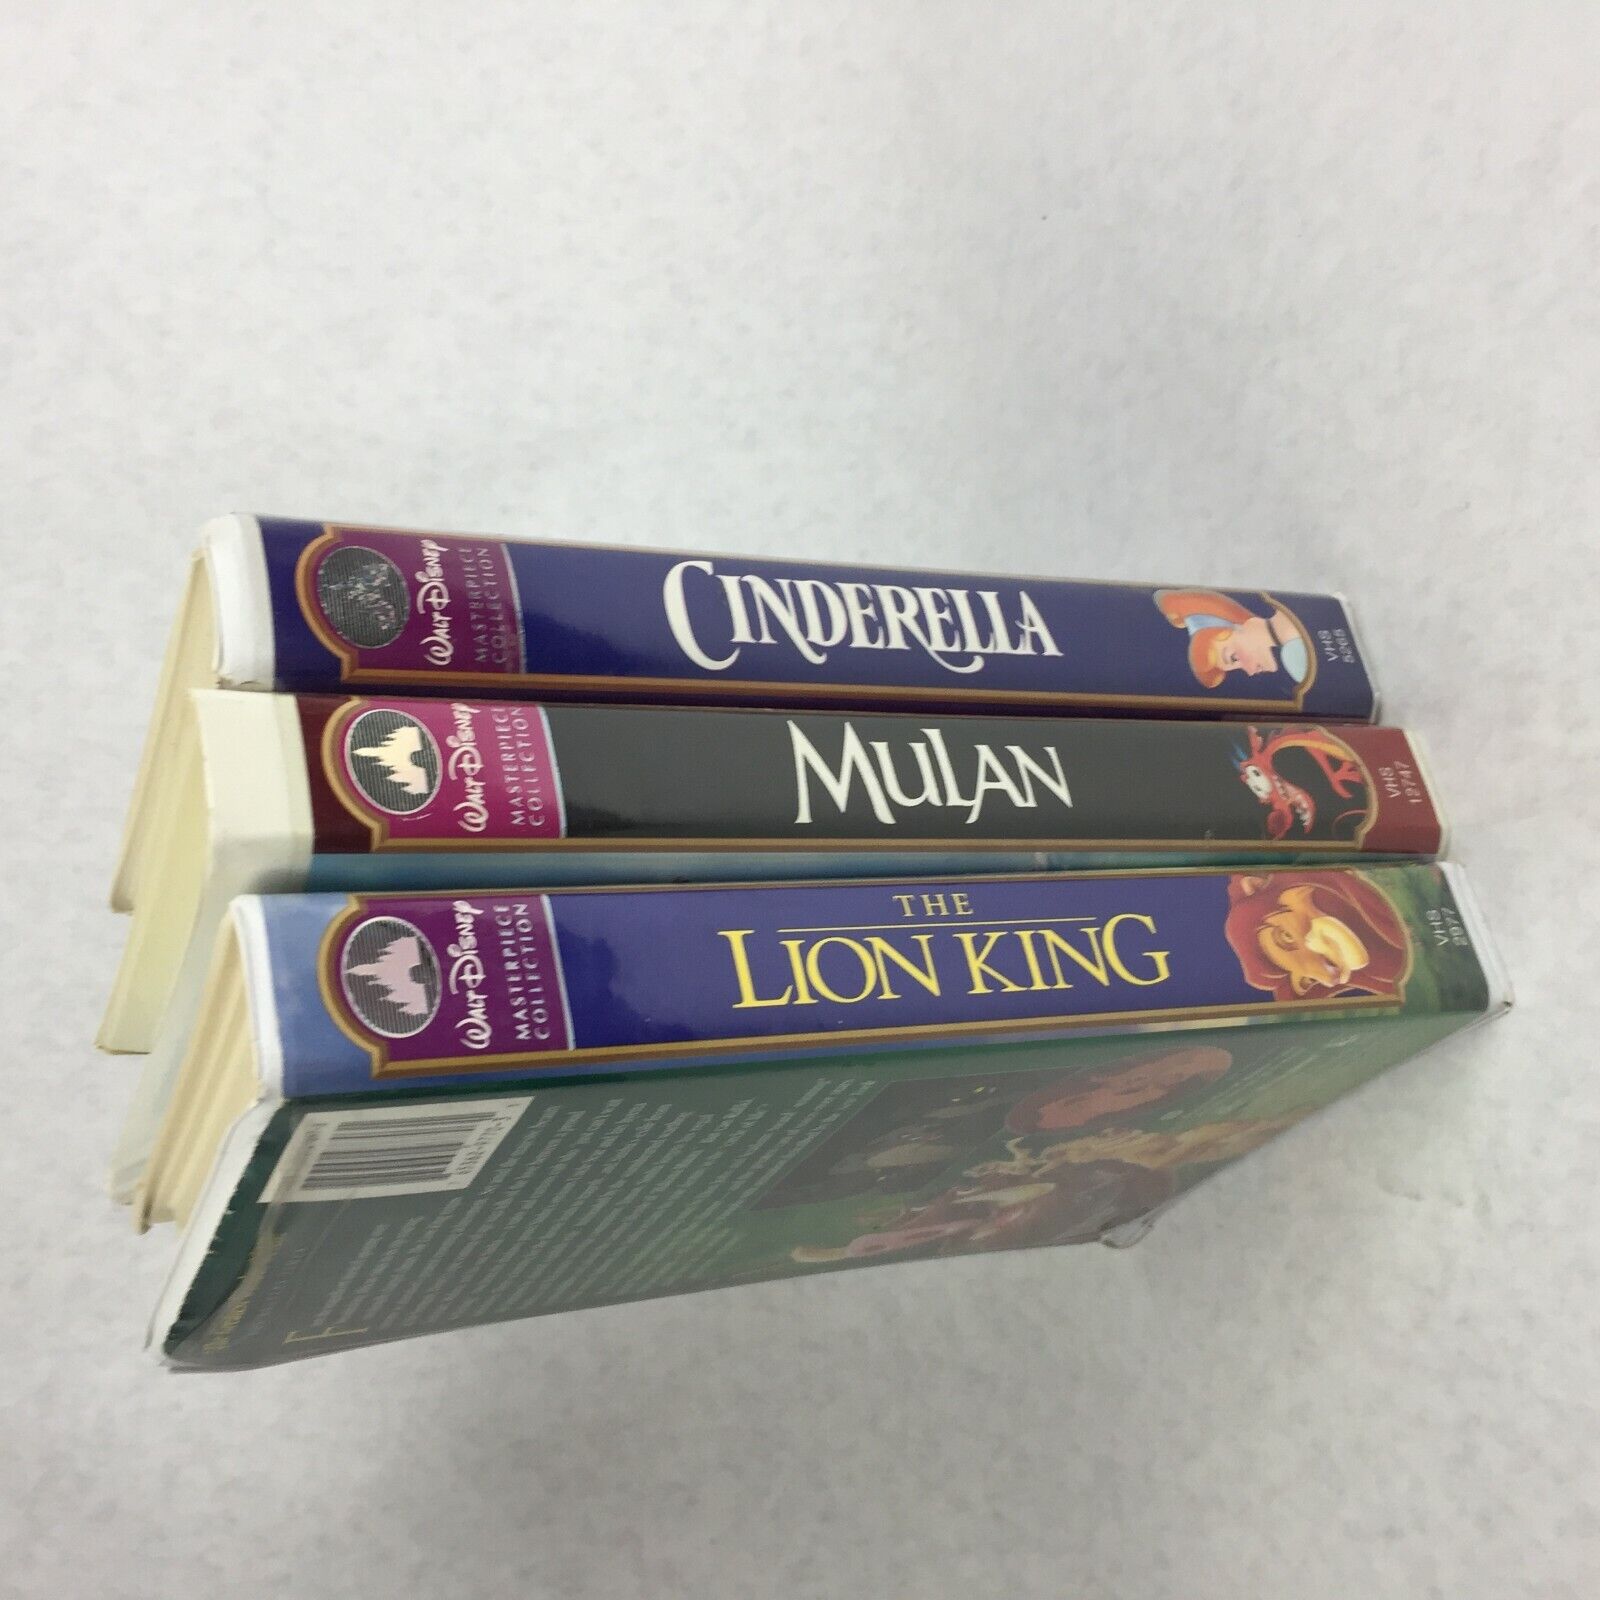 A Walt Disney Masterpiece Lion King Mulan Cinderella VHS Family Classic Movies